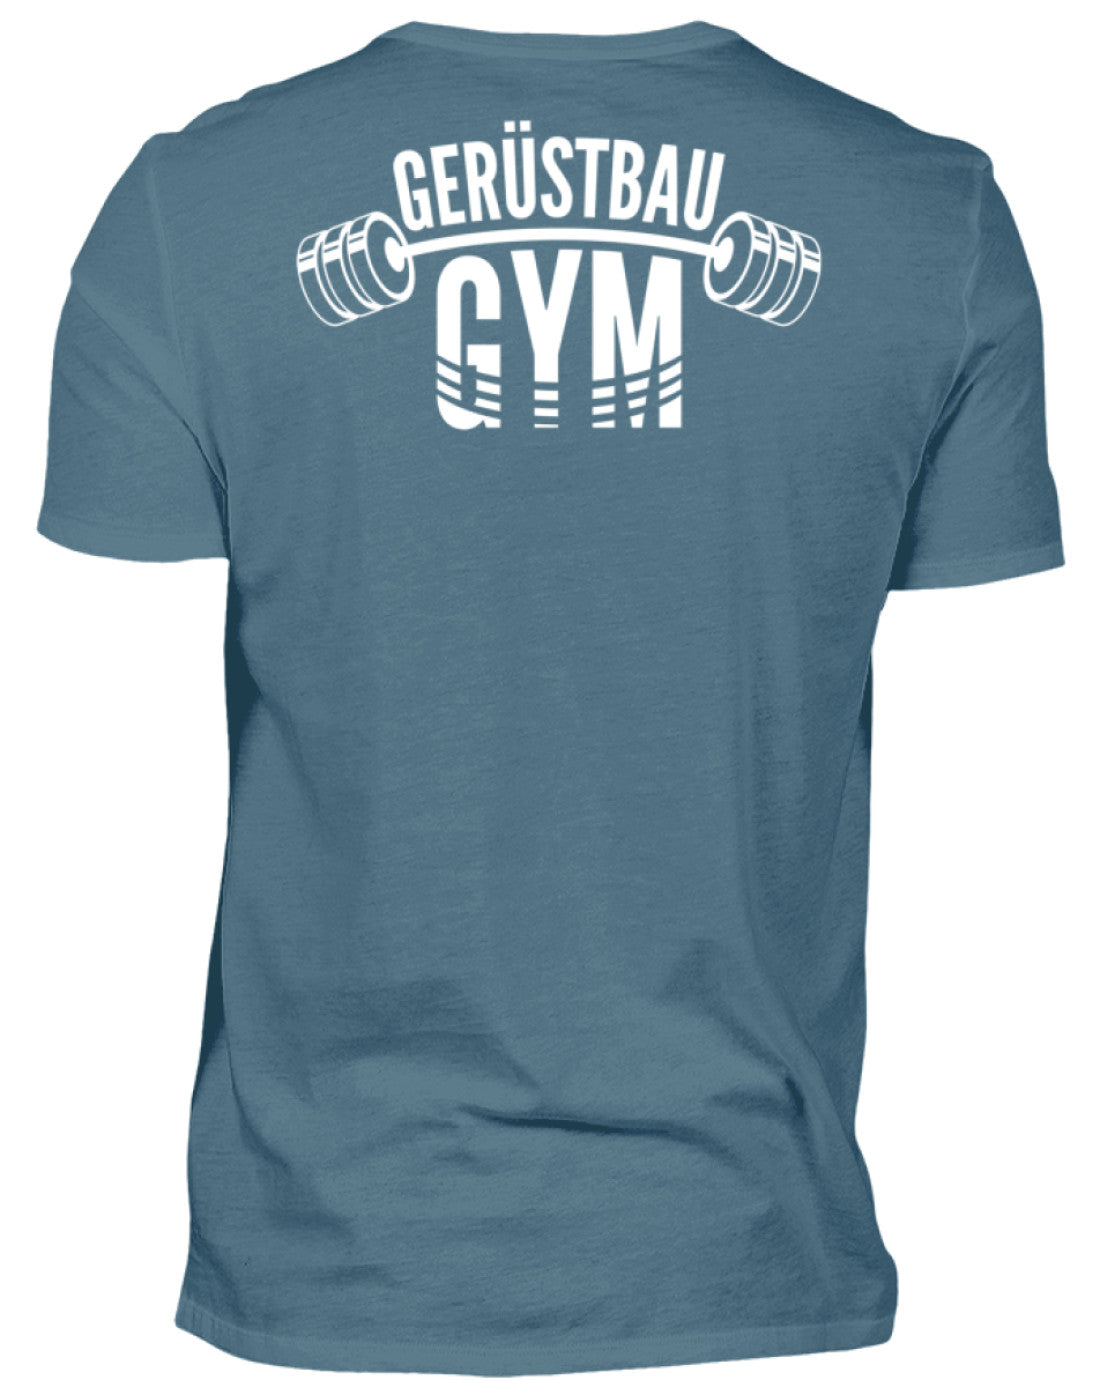 Gerüstbauer T-Shirt Gerüstbau GYM €24.95 Gerüstbauer - Shop >>